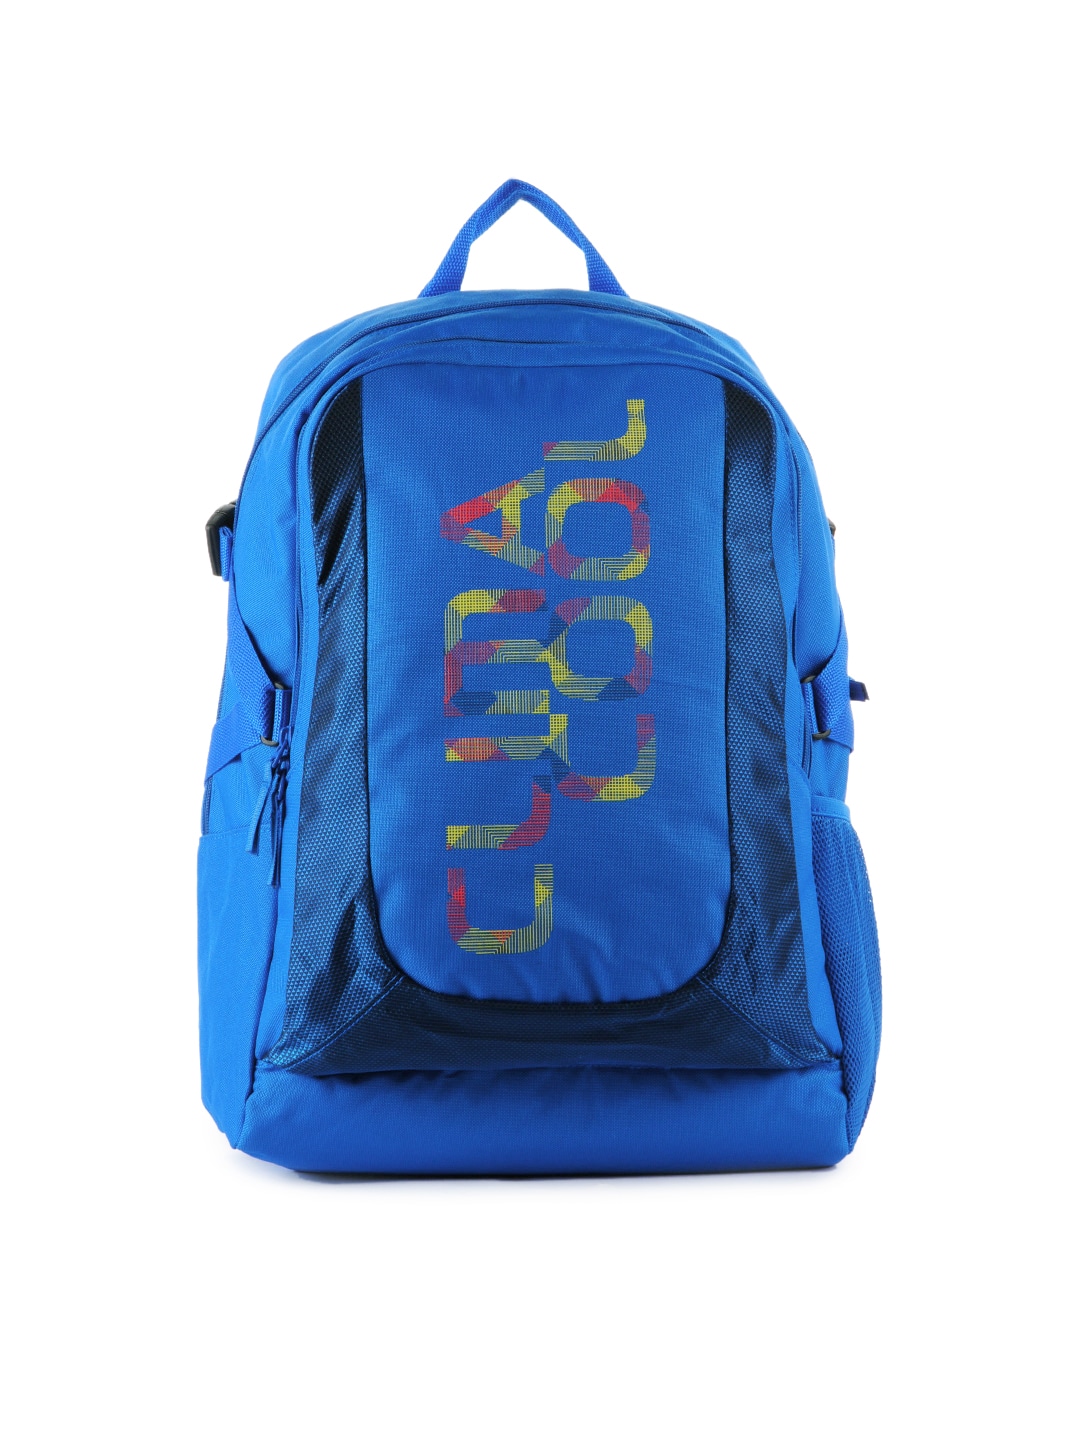 ADIDAS Unisex Clima Graphic Blue Backpack